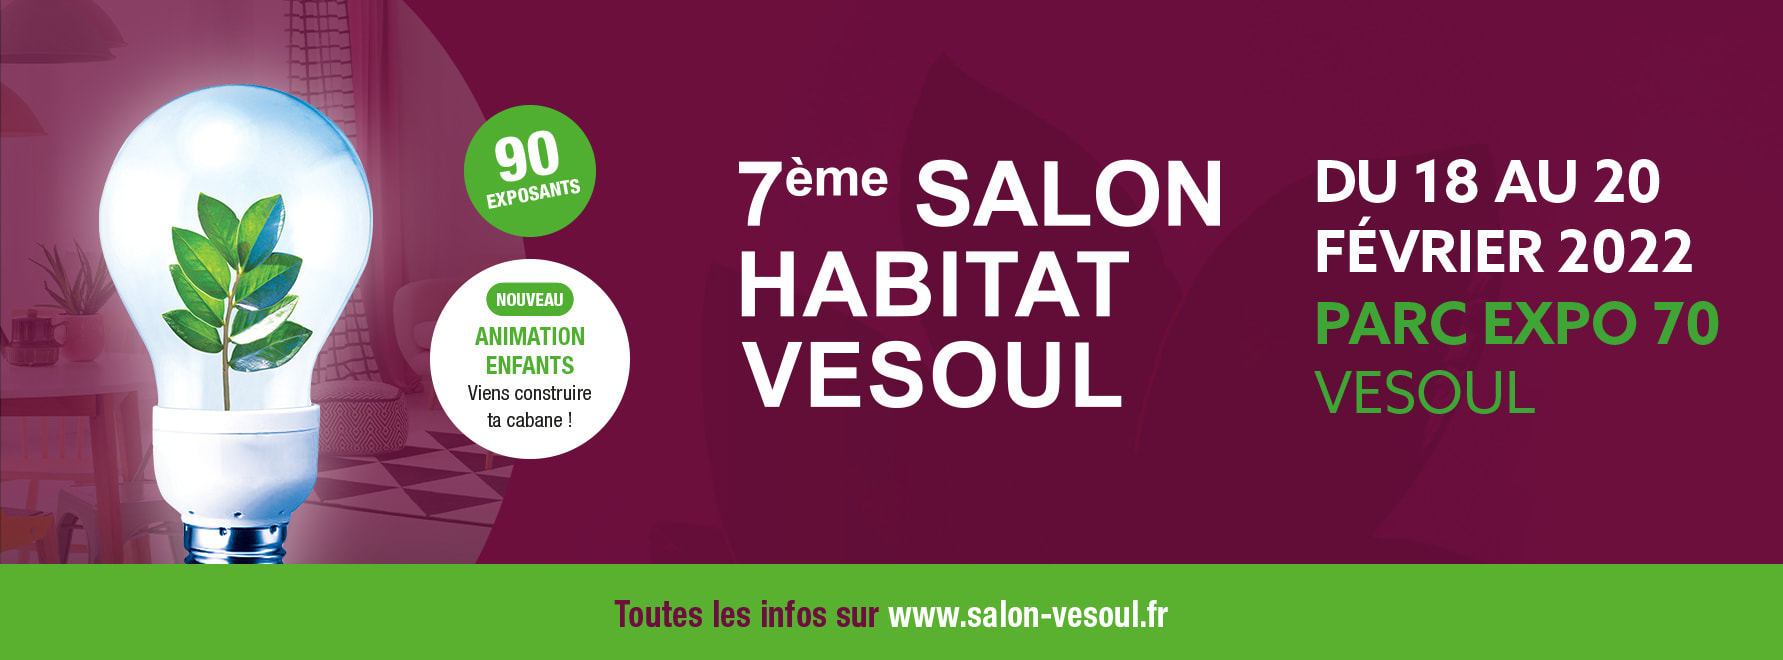 Salon Habitat Vesoul 2022